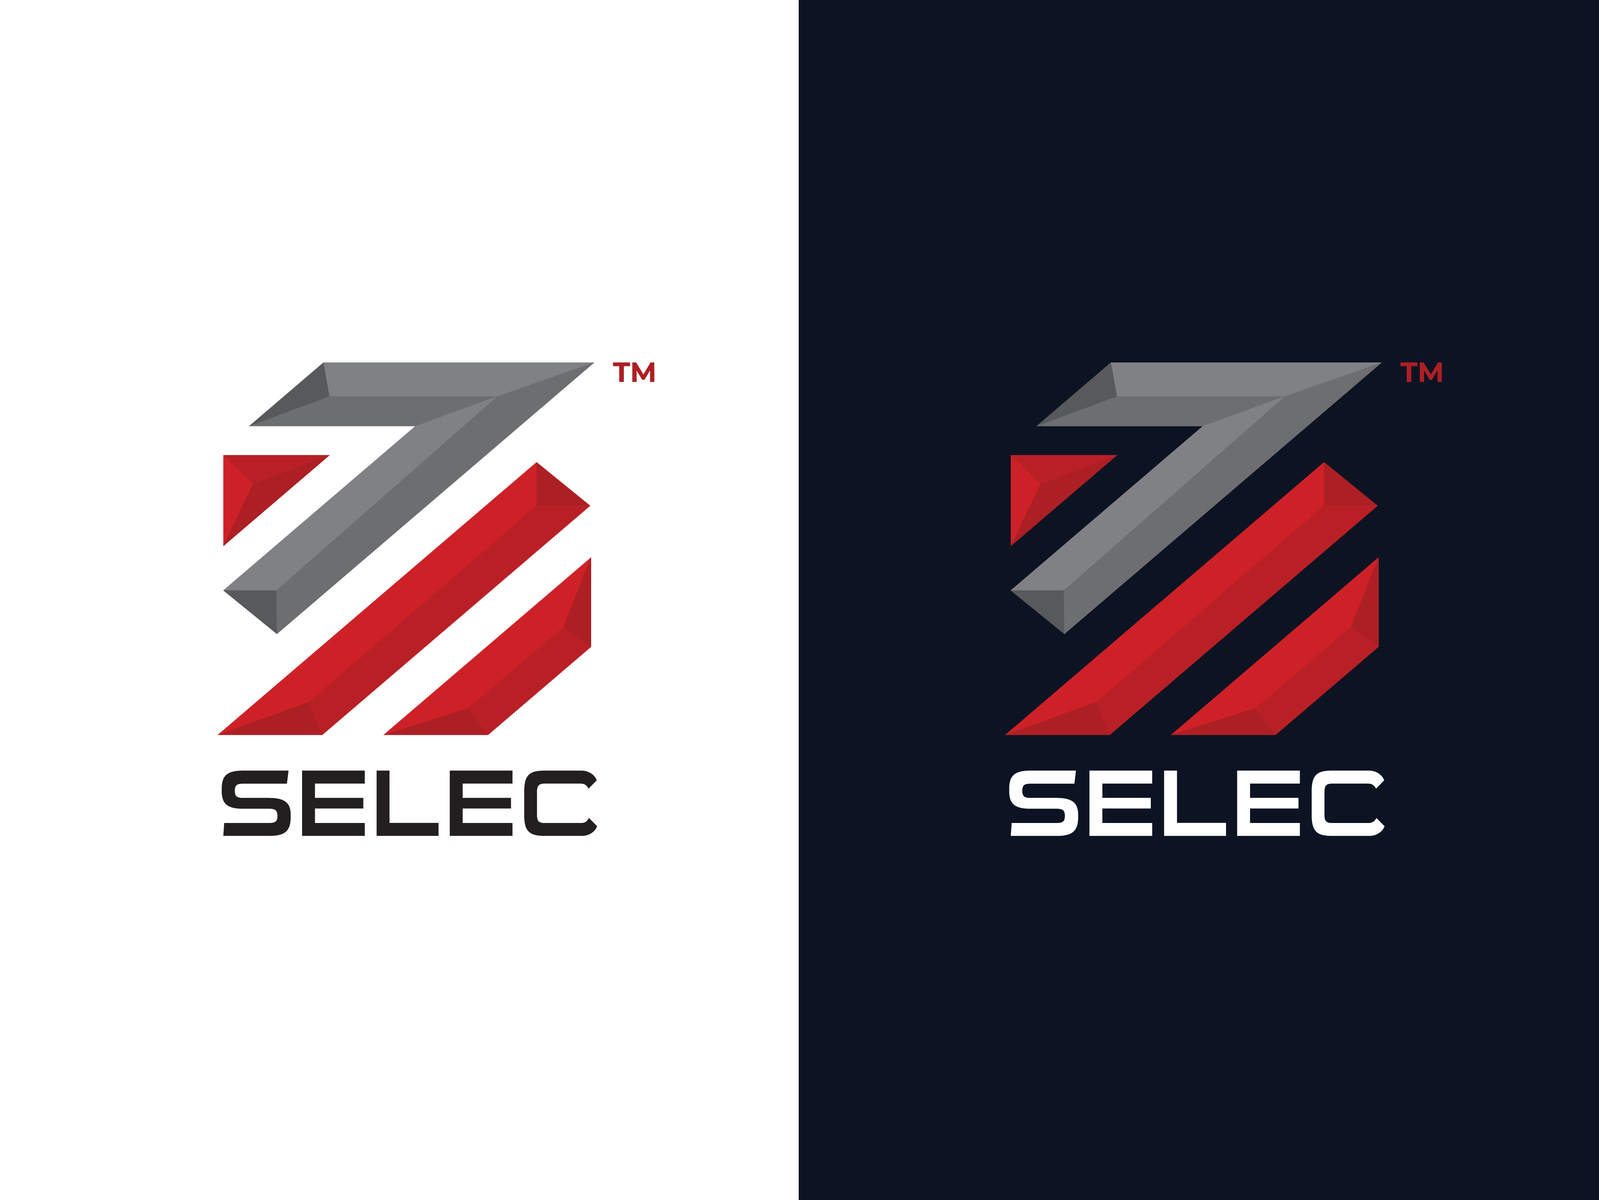 selec-company-logo-by-creativebee-on-dribbble